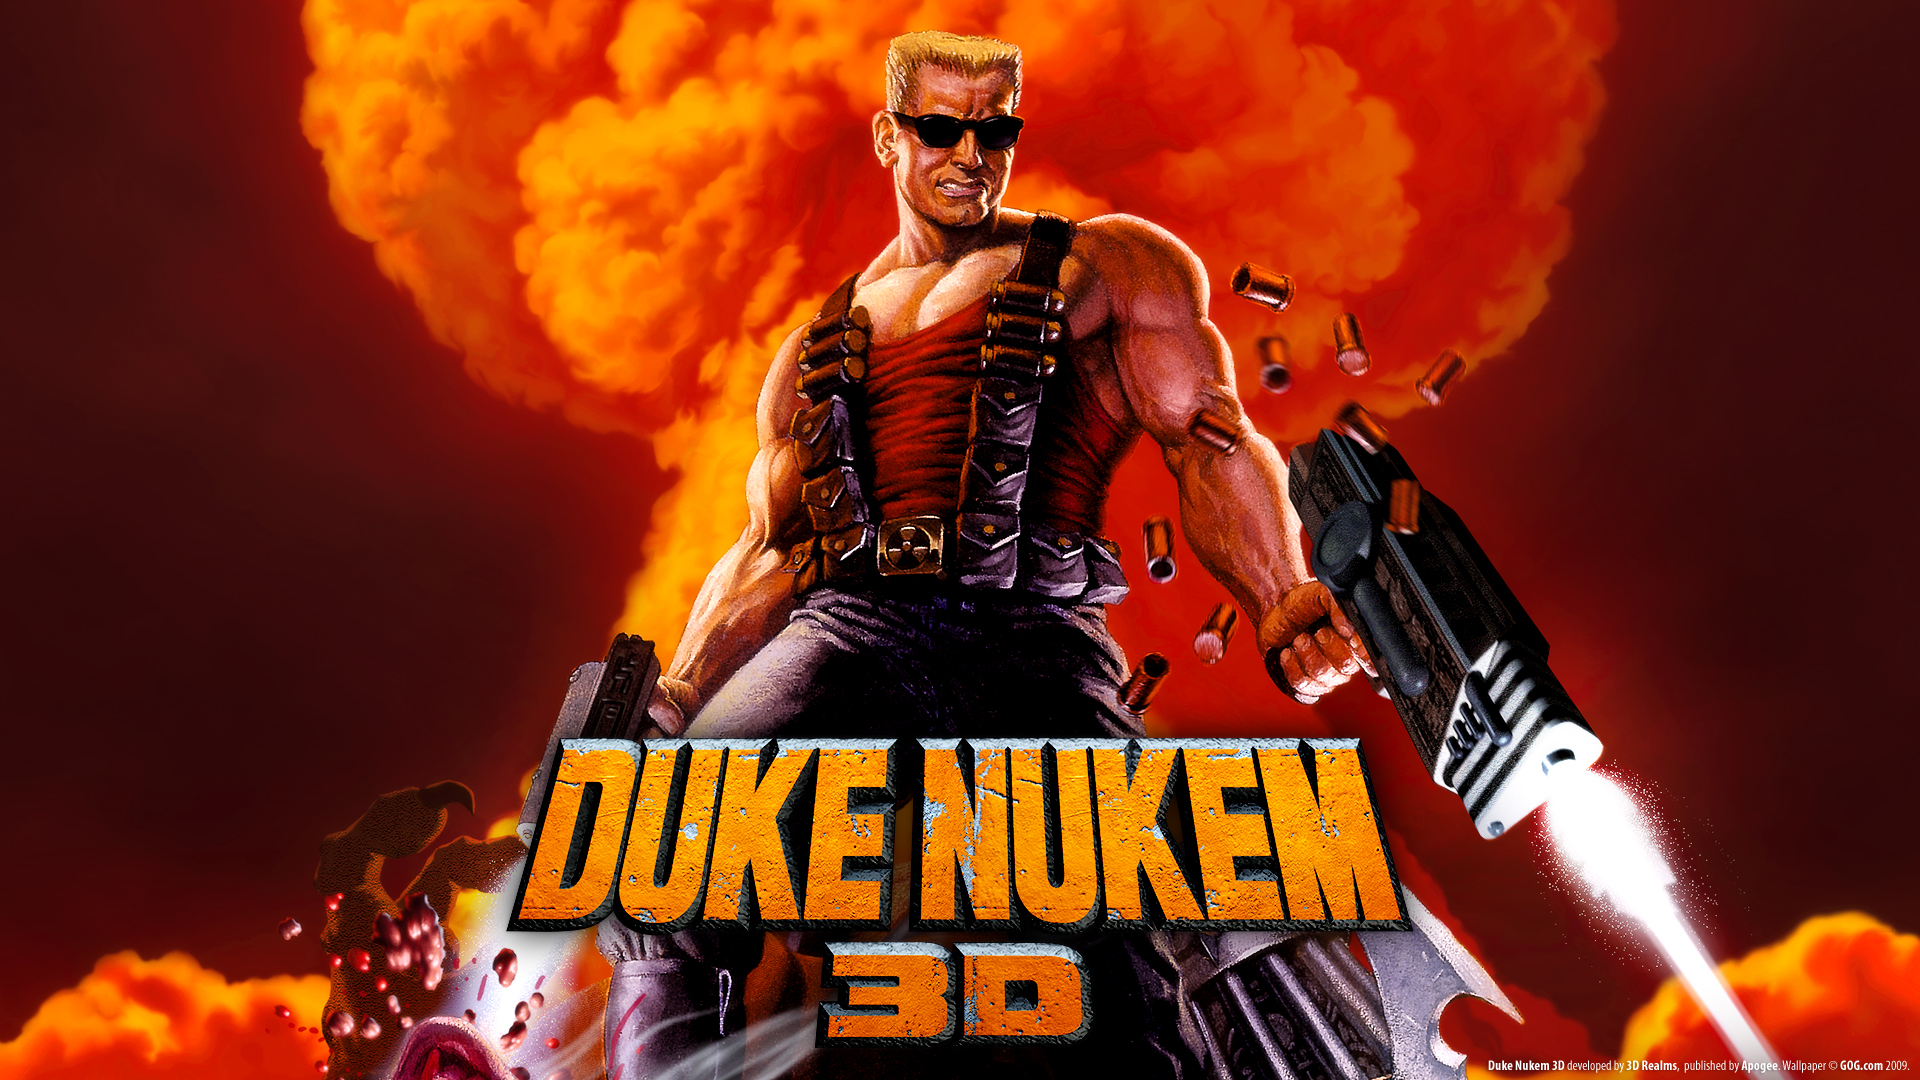 Duke Nukem 3d